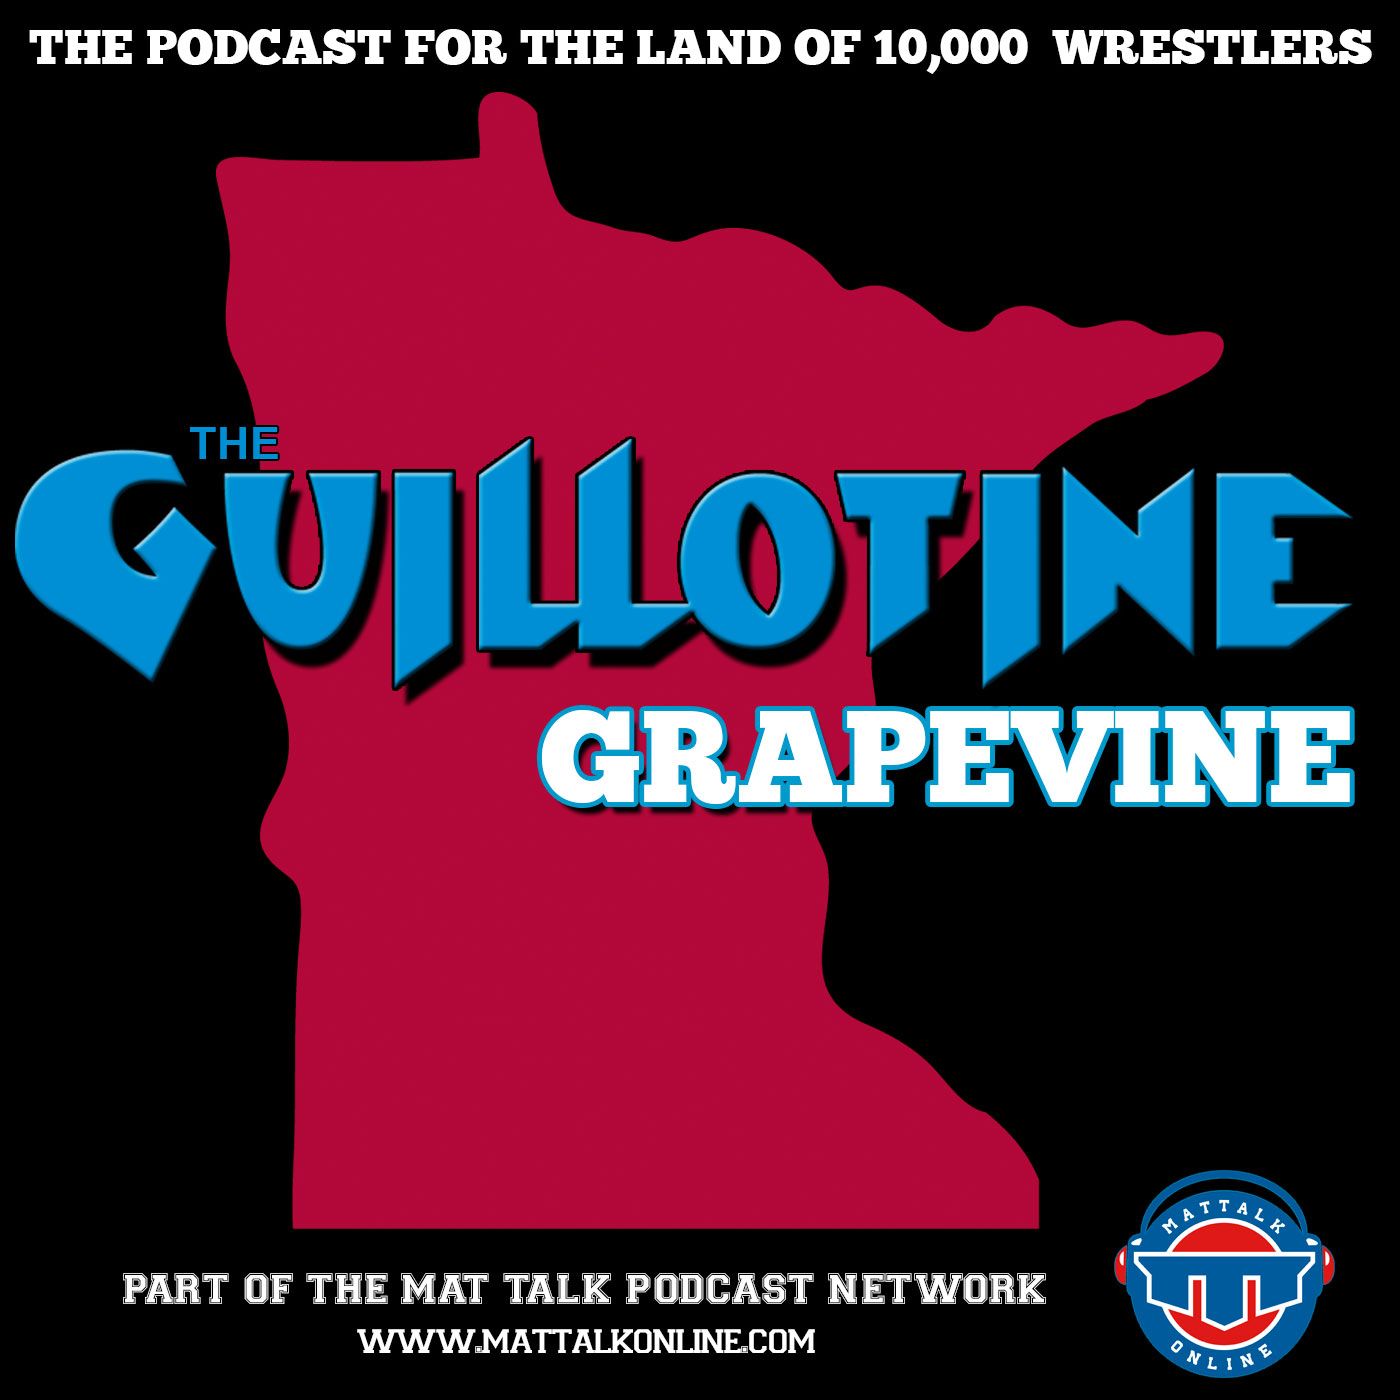 GG16: Jake Clark and Alan Rice host German wrestlers in Minnesota